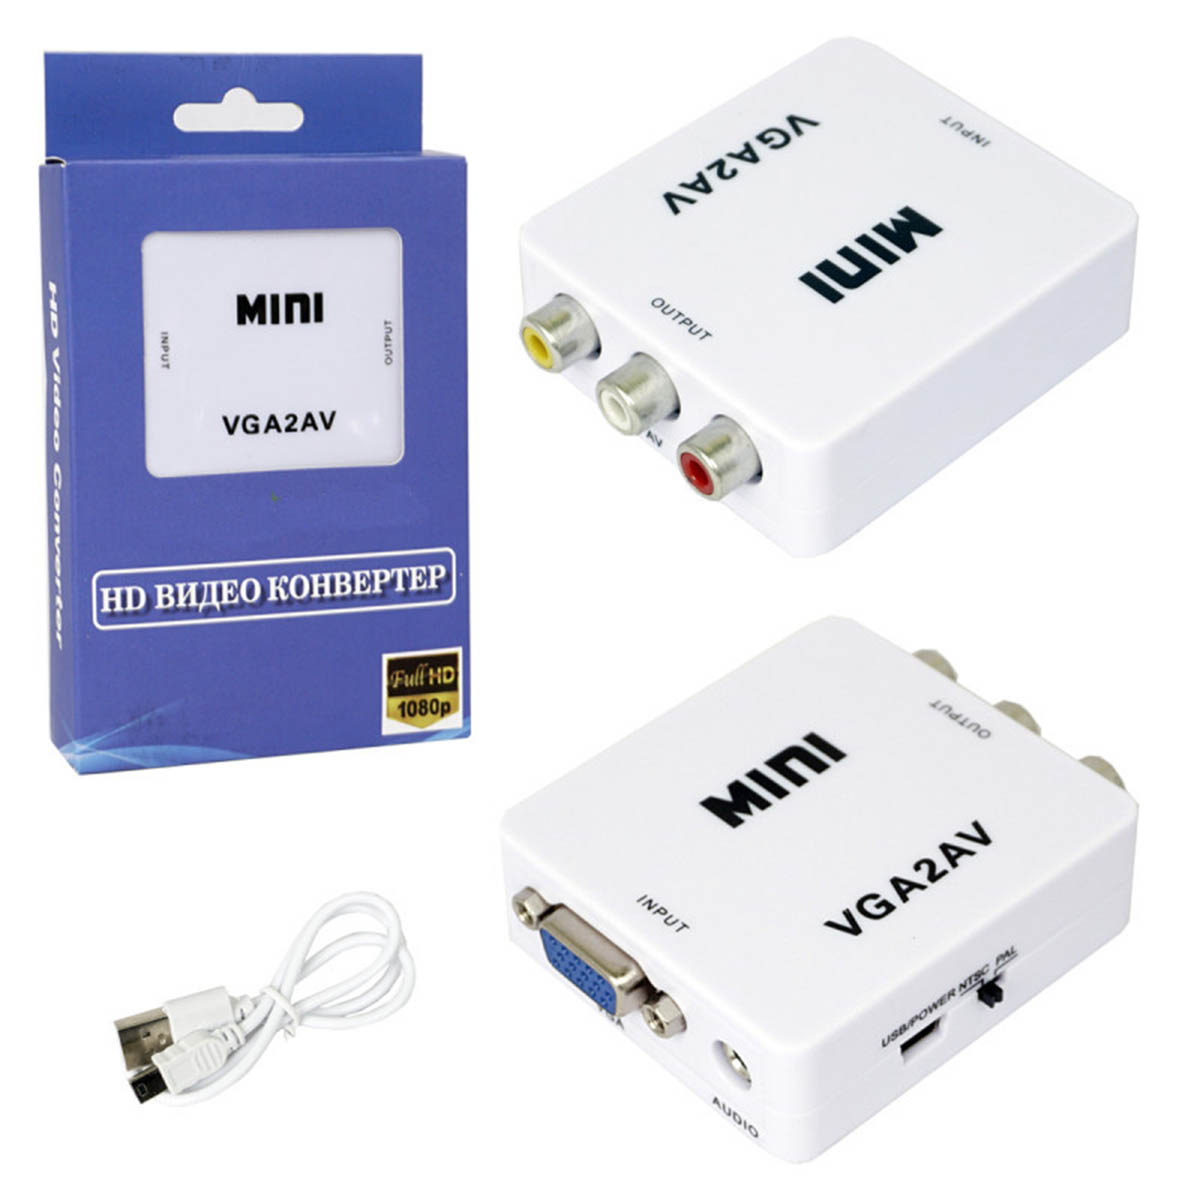 Переходник, адаптер, конвертер H131, VGA to 3 RCA, AUX разъем, кабель питания Mini USB, цвет белый